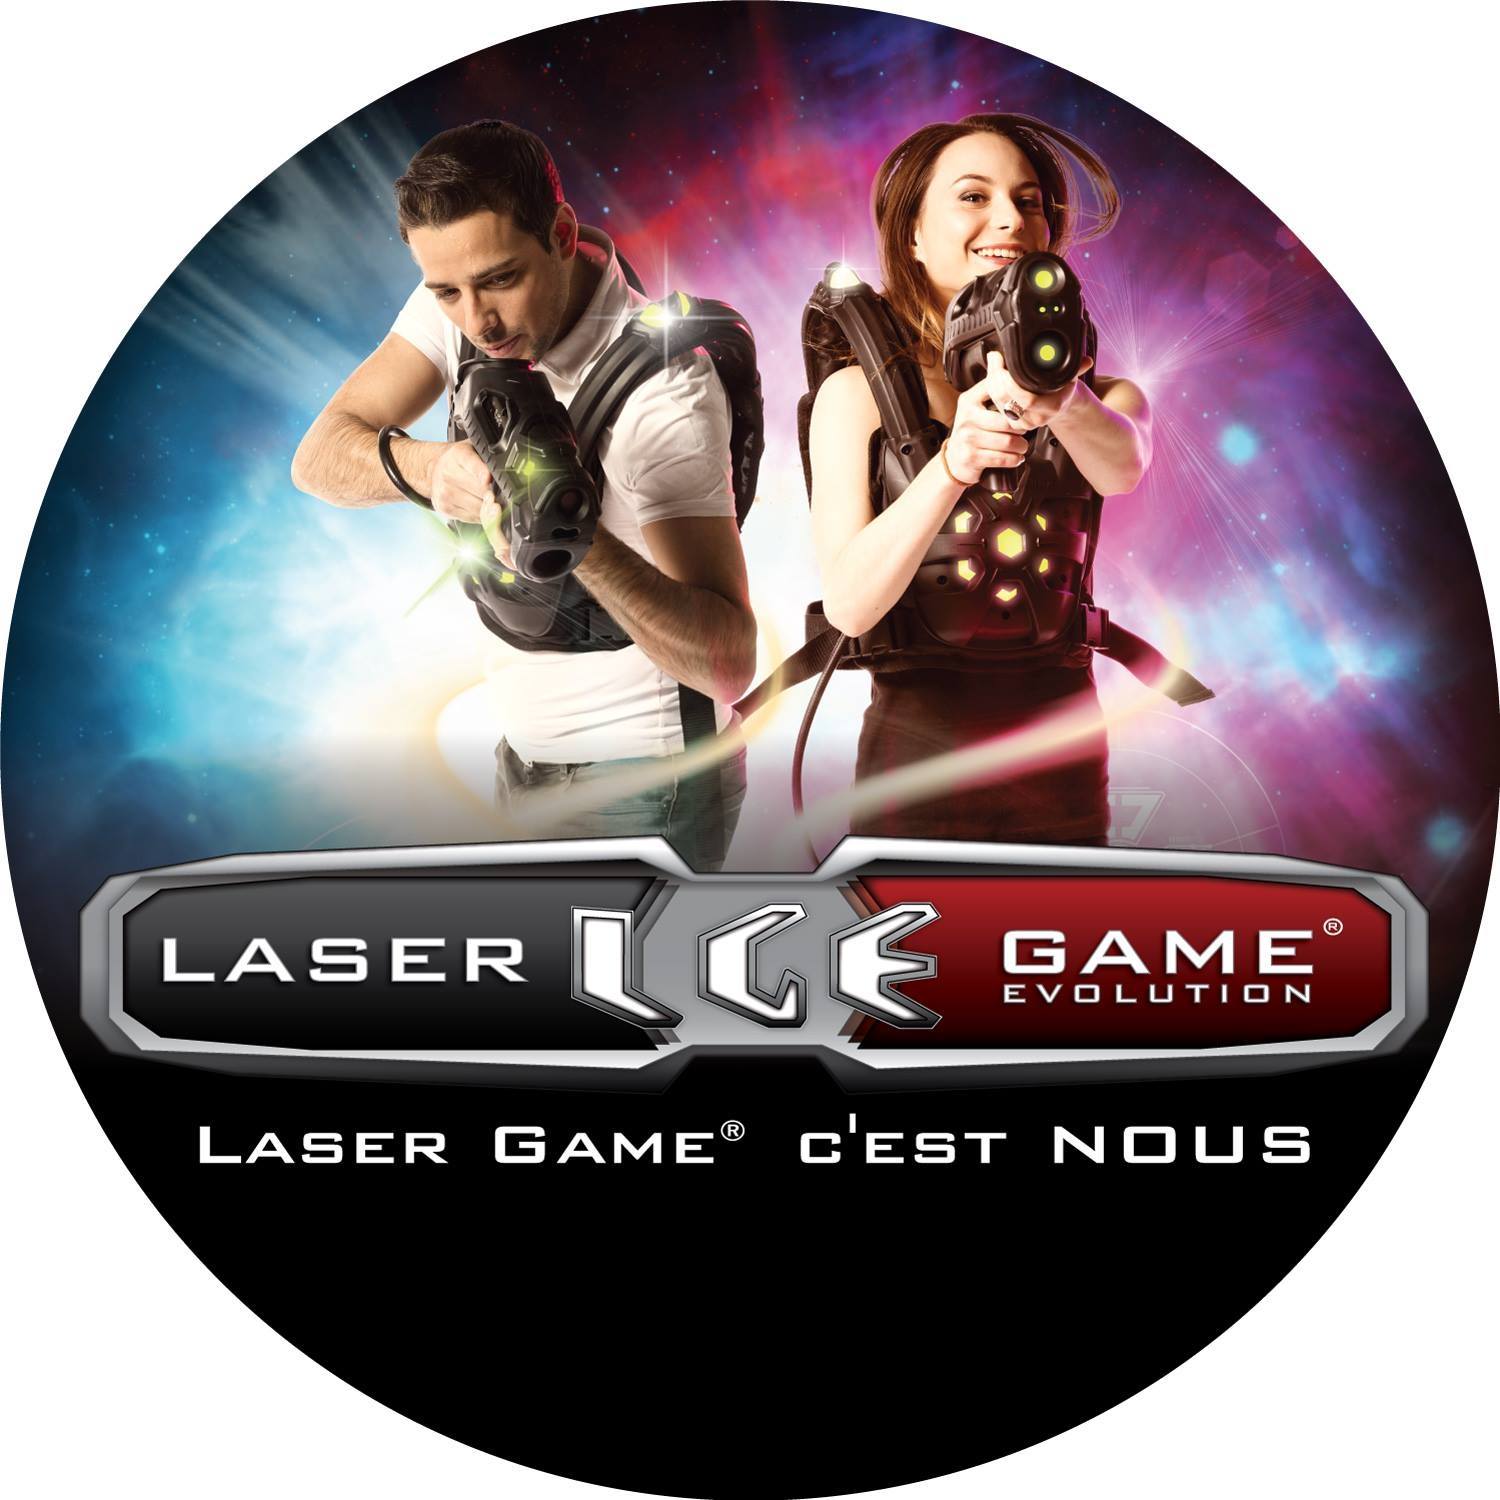 2023/04/lasergame-evolution-1.jpg